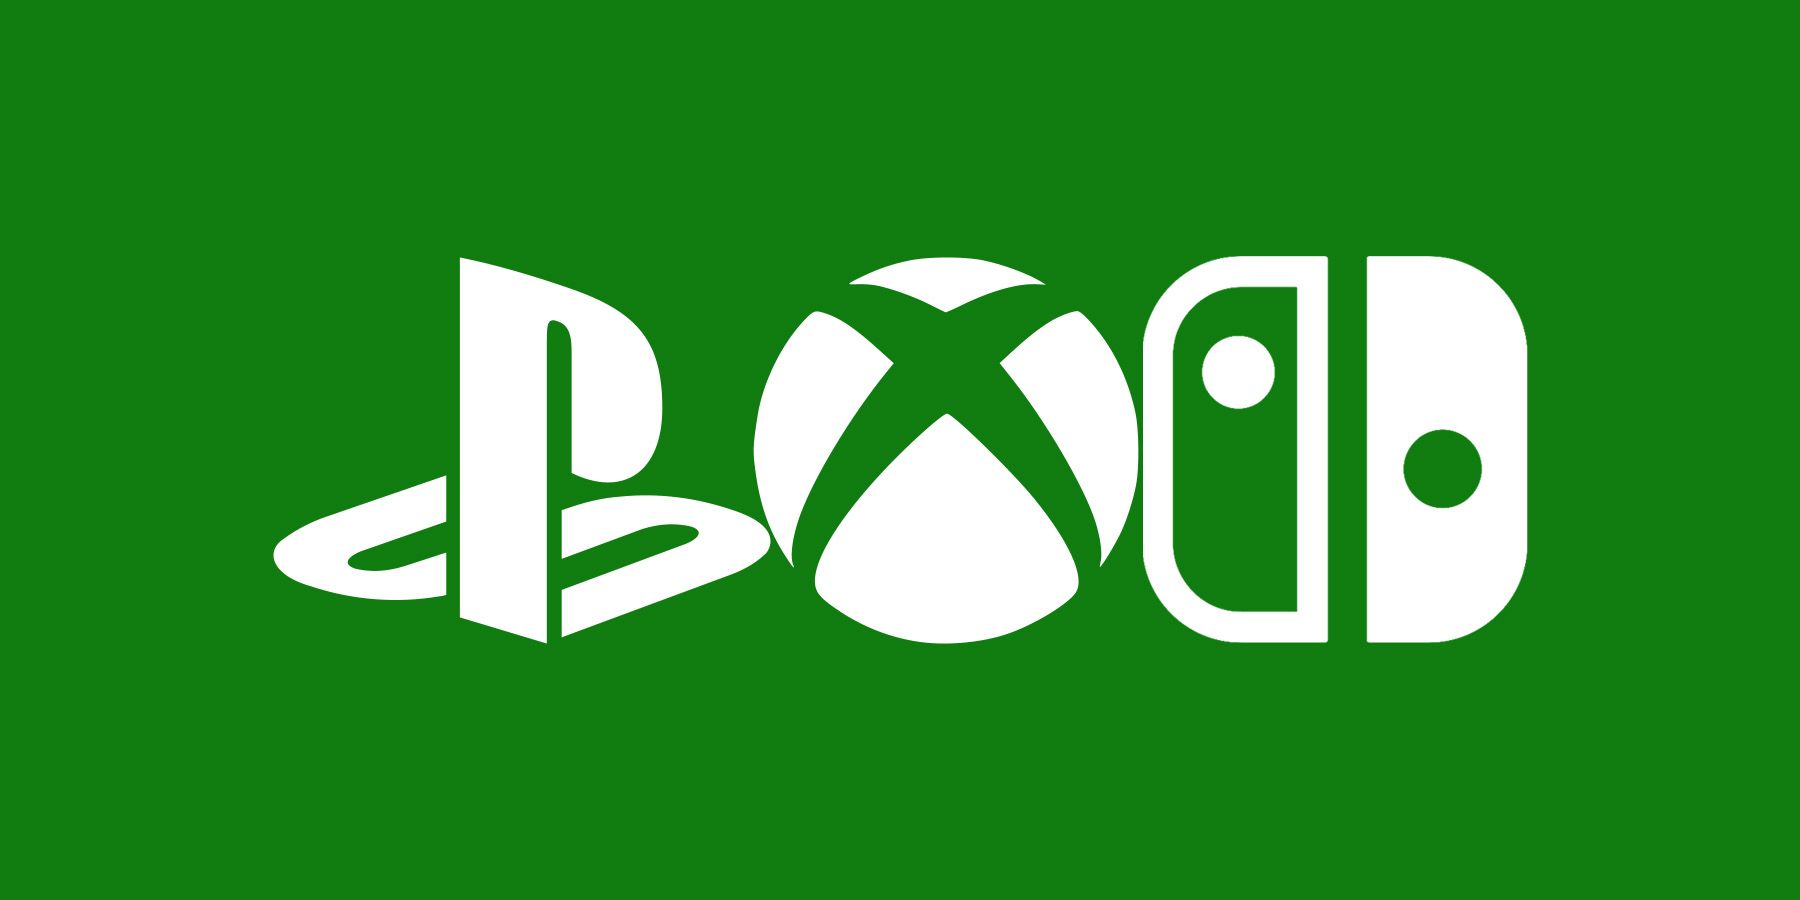 white PlayStation Xbox Nintendo Switch logo submarks on dark green Xbox background